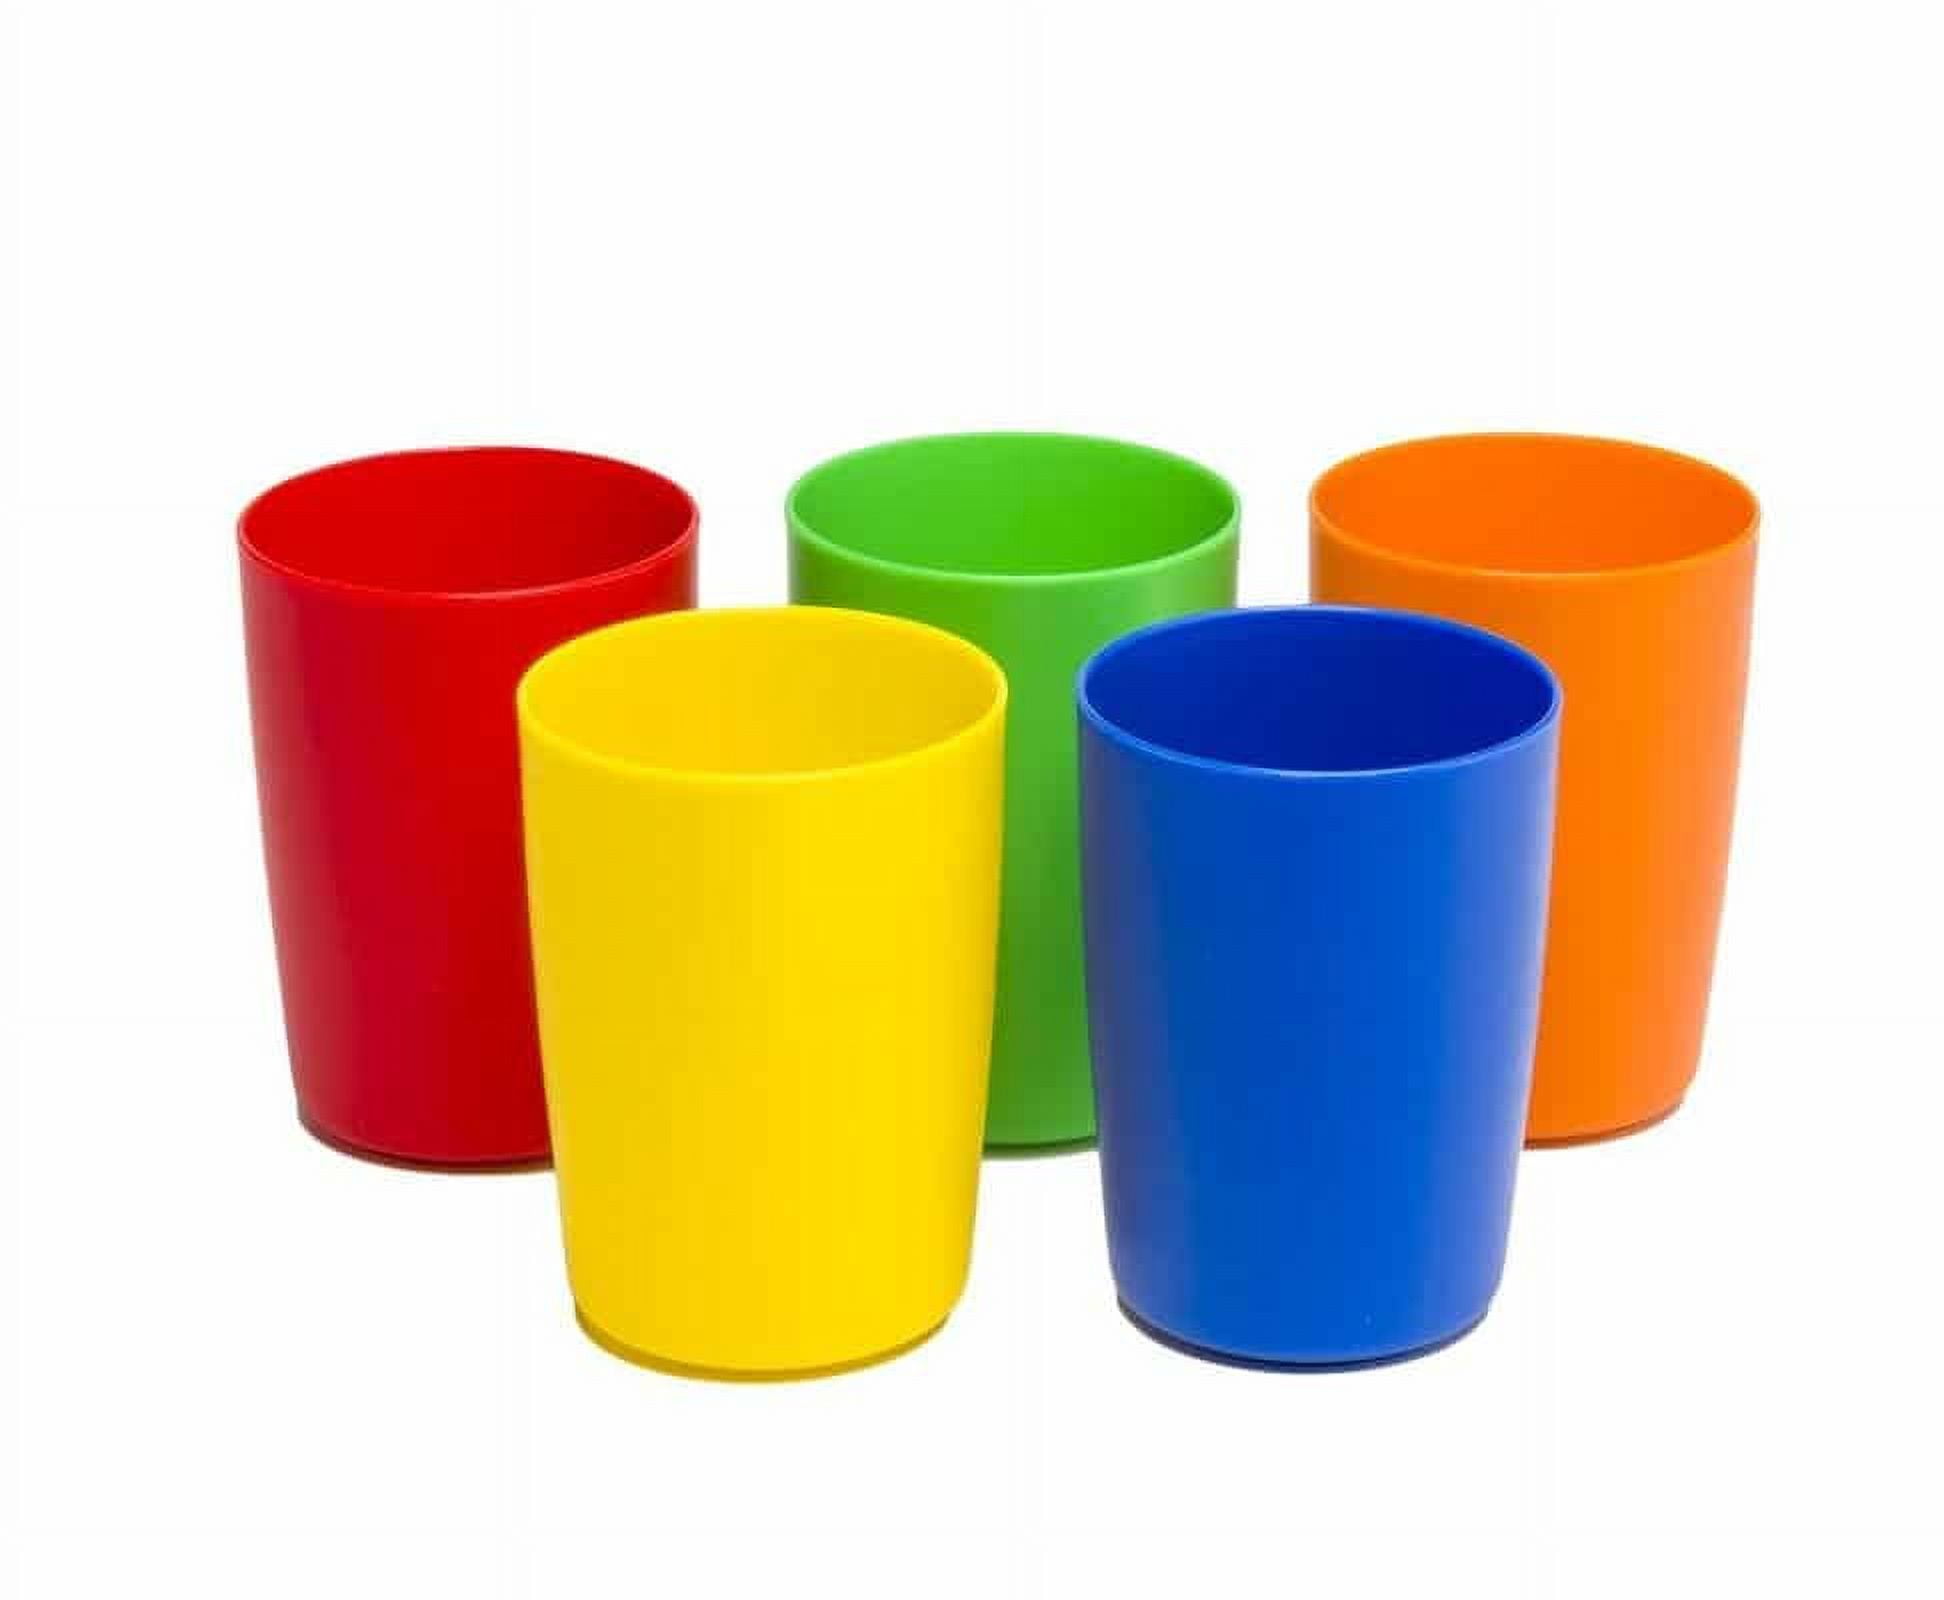 Greenco Set of 5 Unbreakable Reusable Plastic Kids Cups, Assorted Colors, 5 oz.